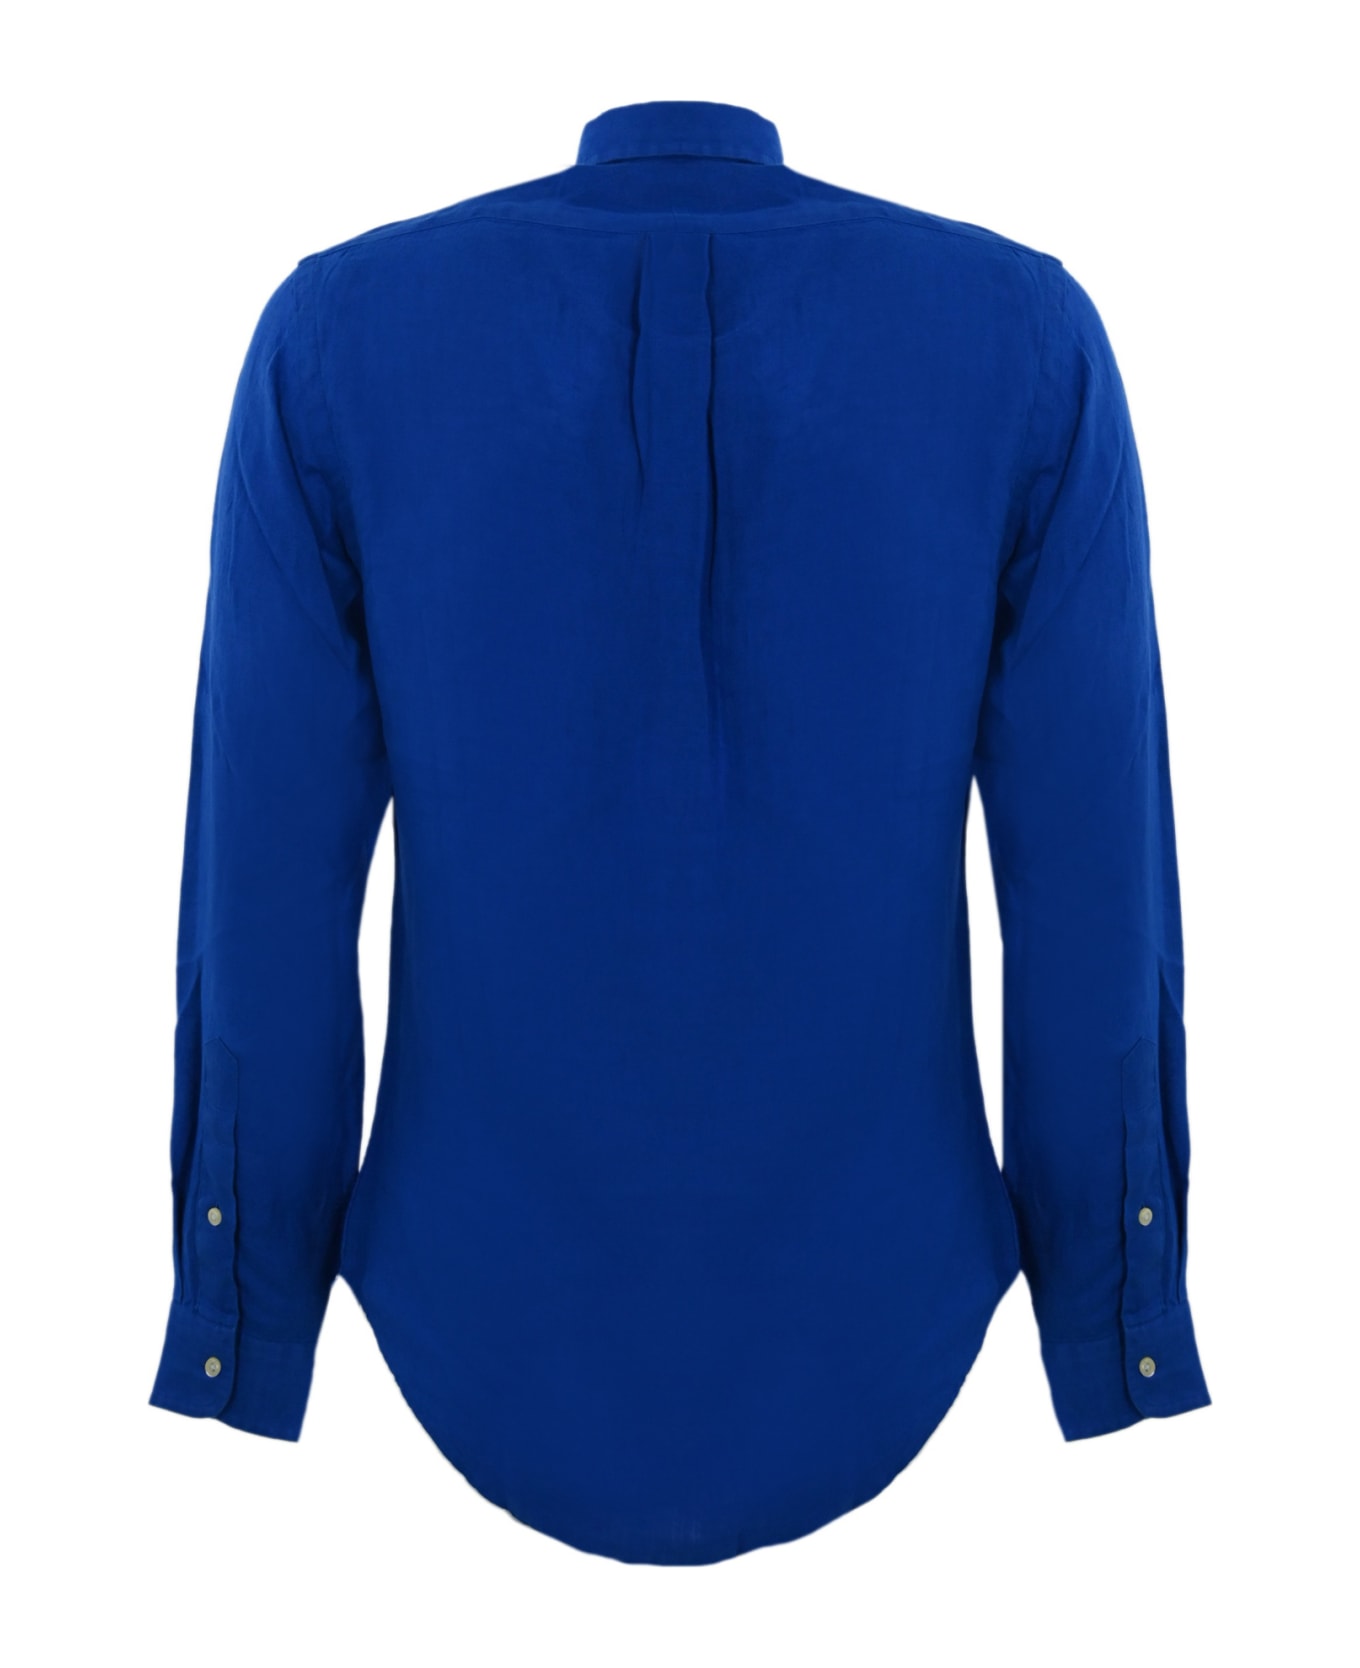 Polo Ralph Lauren Shirt - HERITAGE BLUE